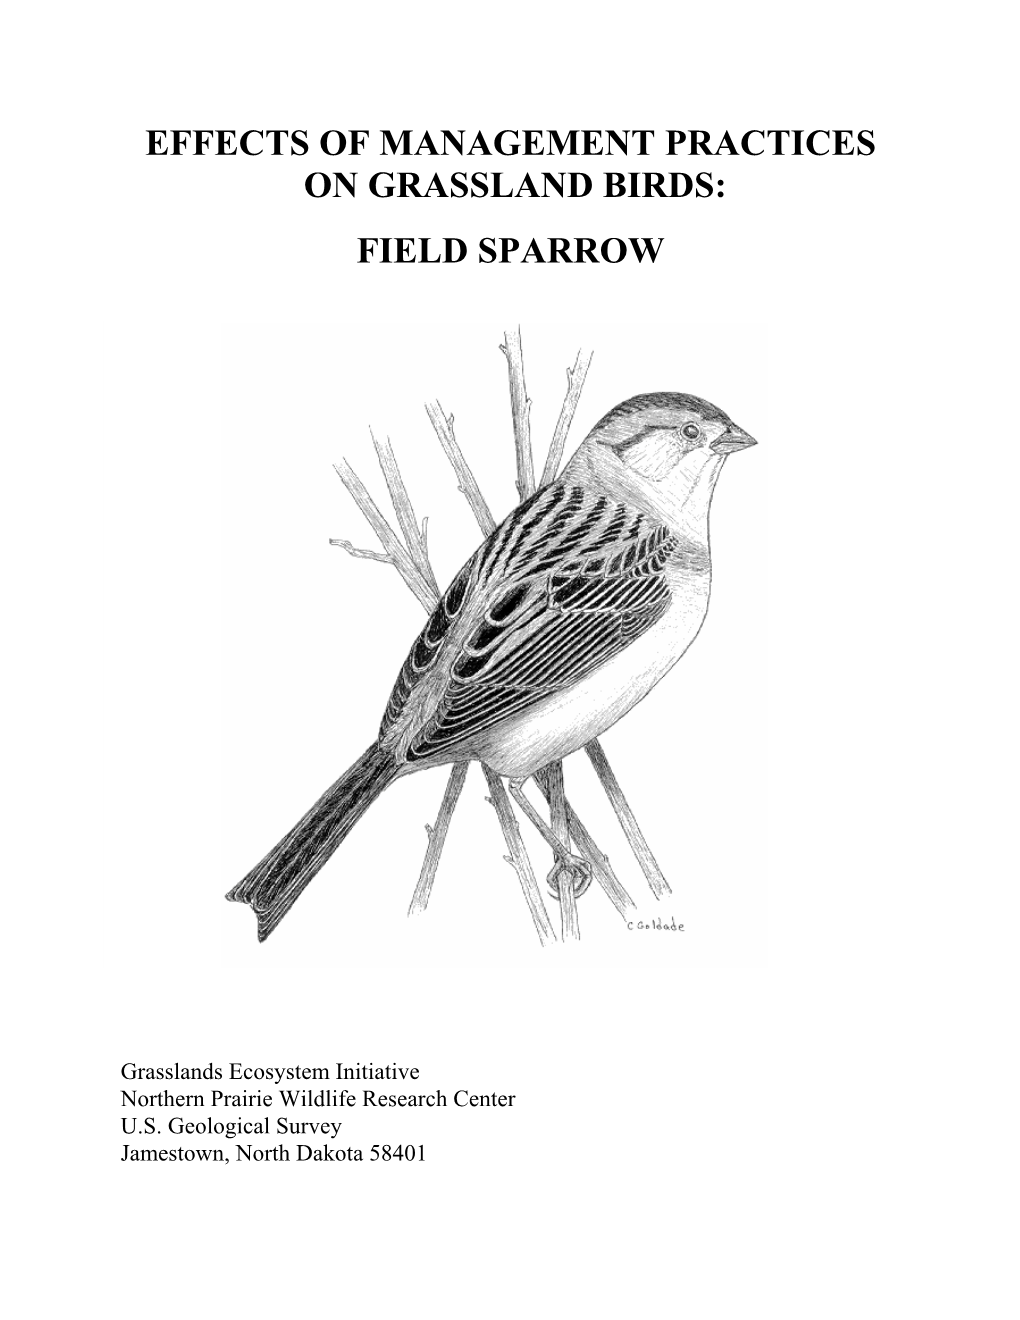 Effects of Management Practices on Grassland Birds